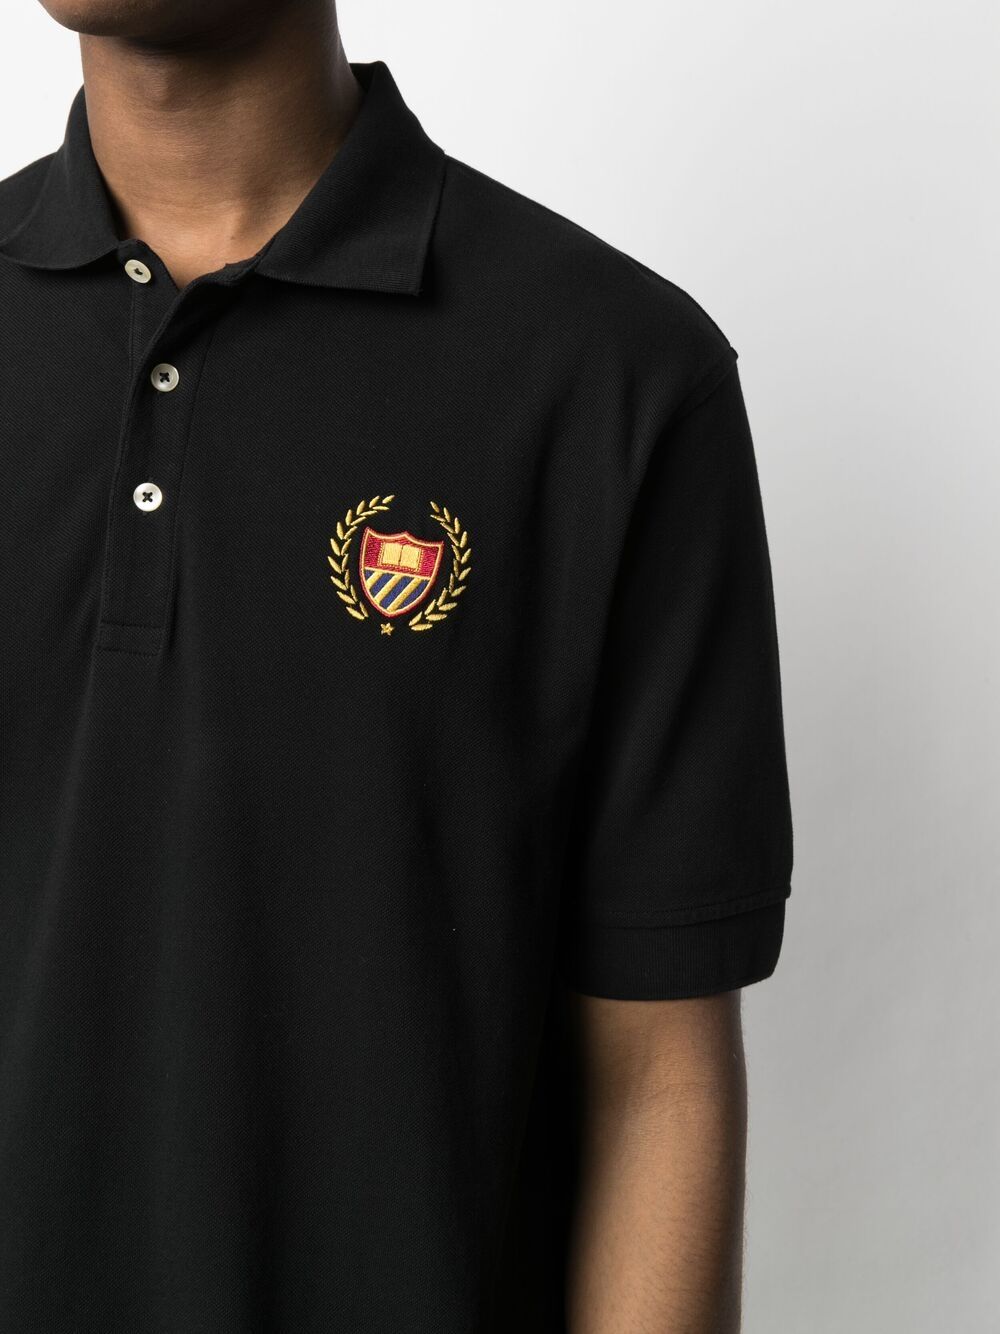 BEL-AIR ATHLETICS Academy Crest Polo Shirt - MAISONDEFASHION.COM